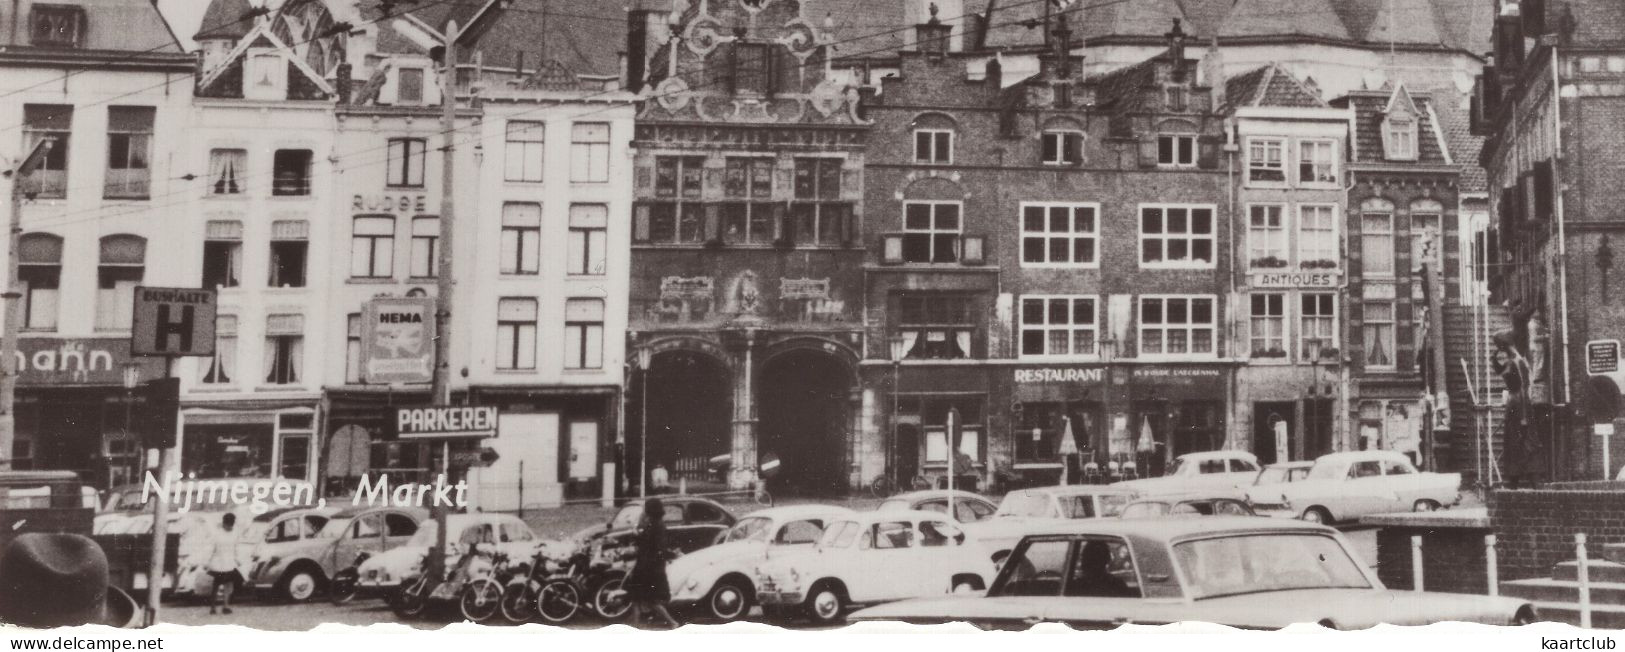 Nijmegen: FORD FAIRLANE '54, TAUNUS P2, FIAT 600, VW 1200 KÄFER/COX, CITROËN 2CV, SOLEX - Markt - (Holland) - Passenger Cars